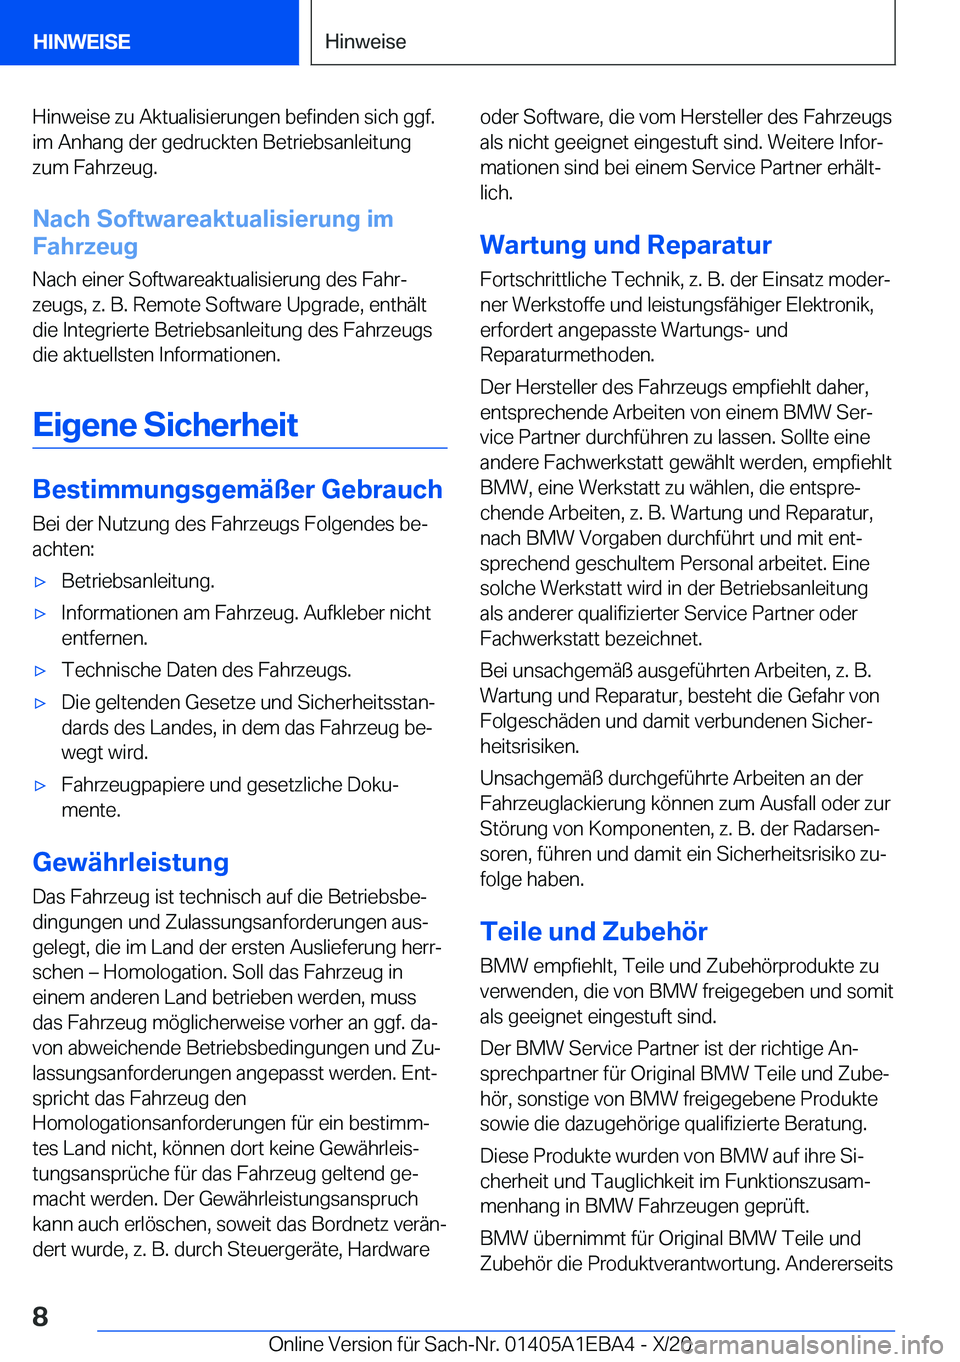 BMW 3 SERIES 2021  Betriebsanleitungen (in German) �H�i�n�w�e�i�s�e��z�u��A�k�t�u�a�l�i�s�i�e�r�u�n�g�e�n��b�e�f�i�n�d�e�n��s�i�c�h��g�g�f�.�i�m��A�n�h�a�n�g��d�e�r��g�e�d�r�u�c�k�t�e�n��B�e�t�r�i�e�b�s�a�n�l�e�i�t�u�n�g�z�u�m��F�a�h�r�z�e�u